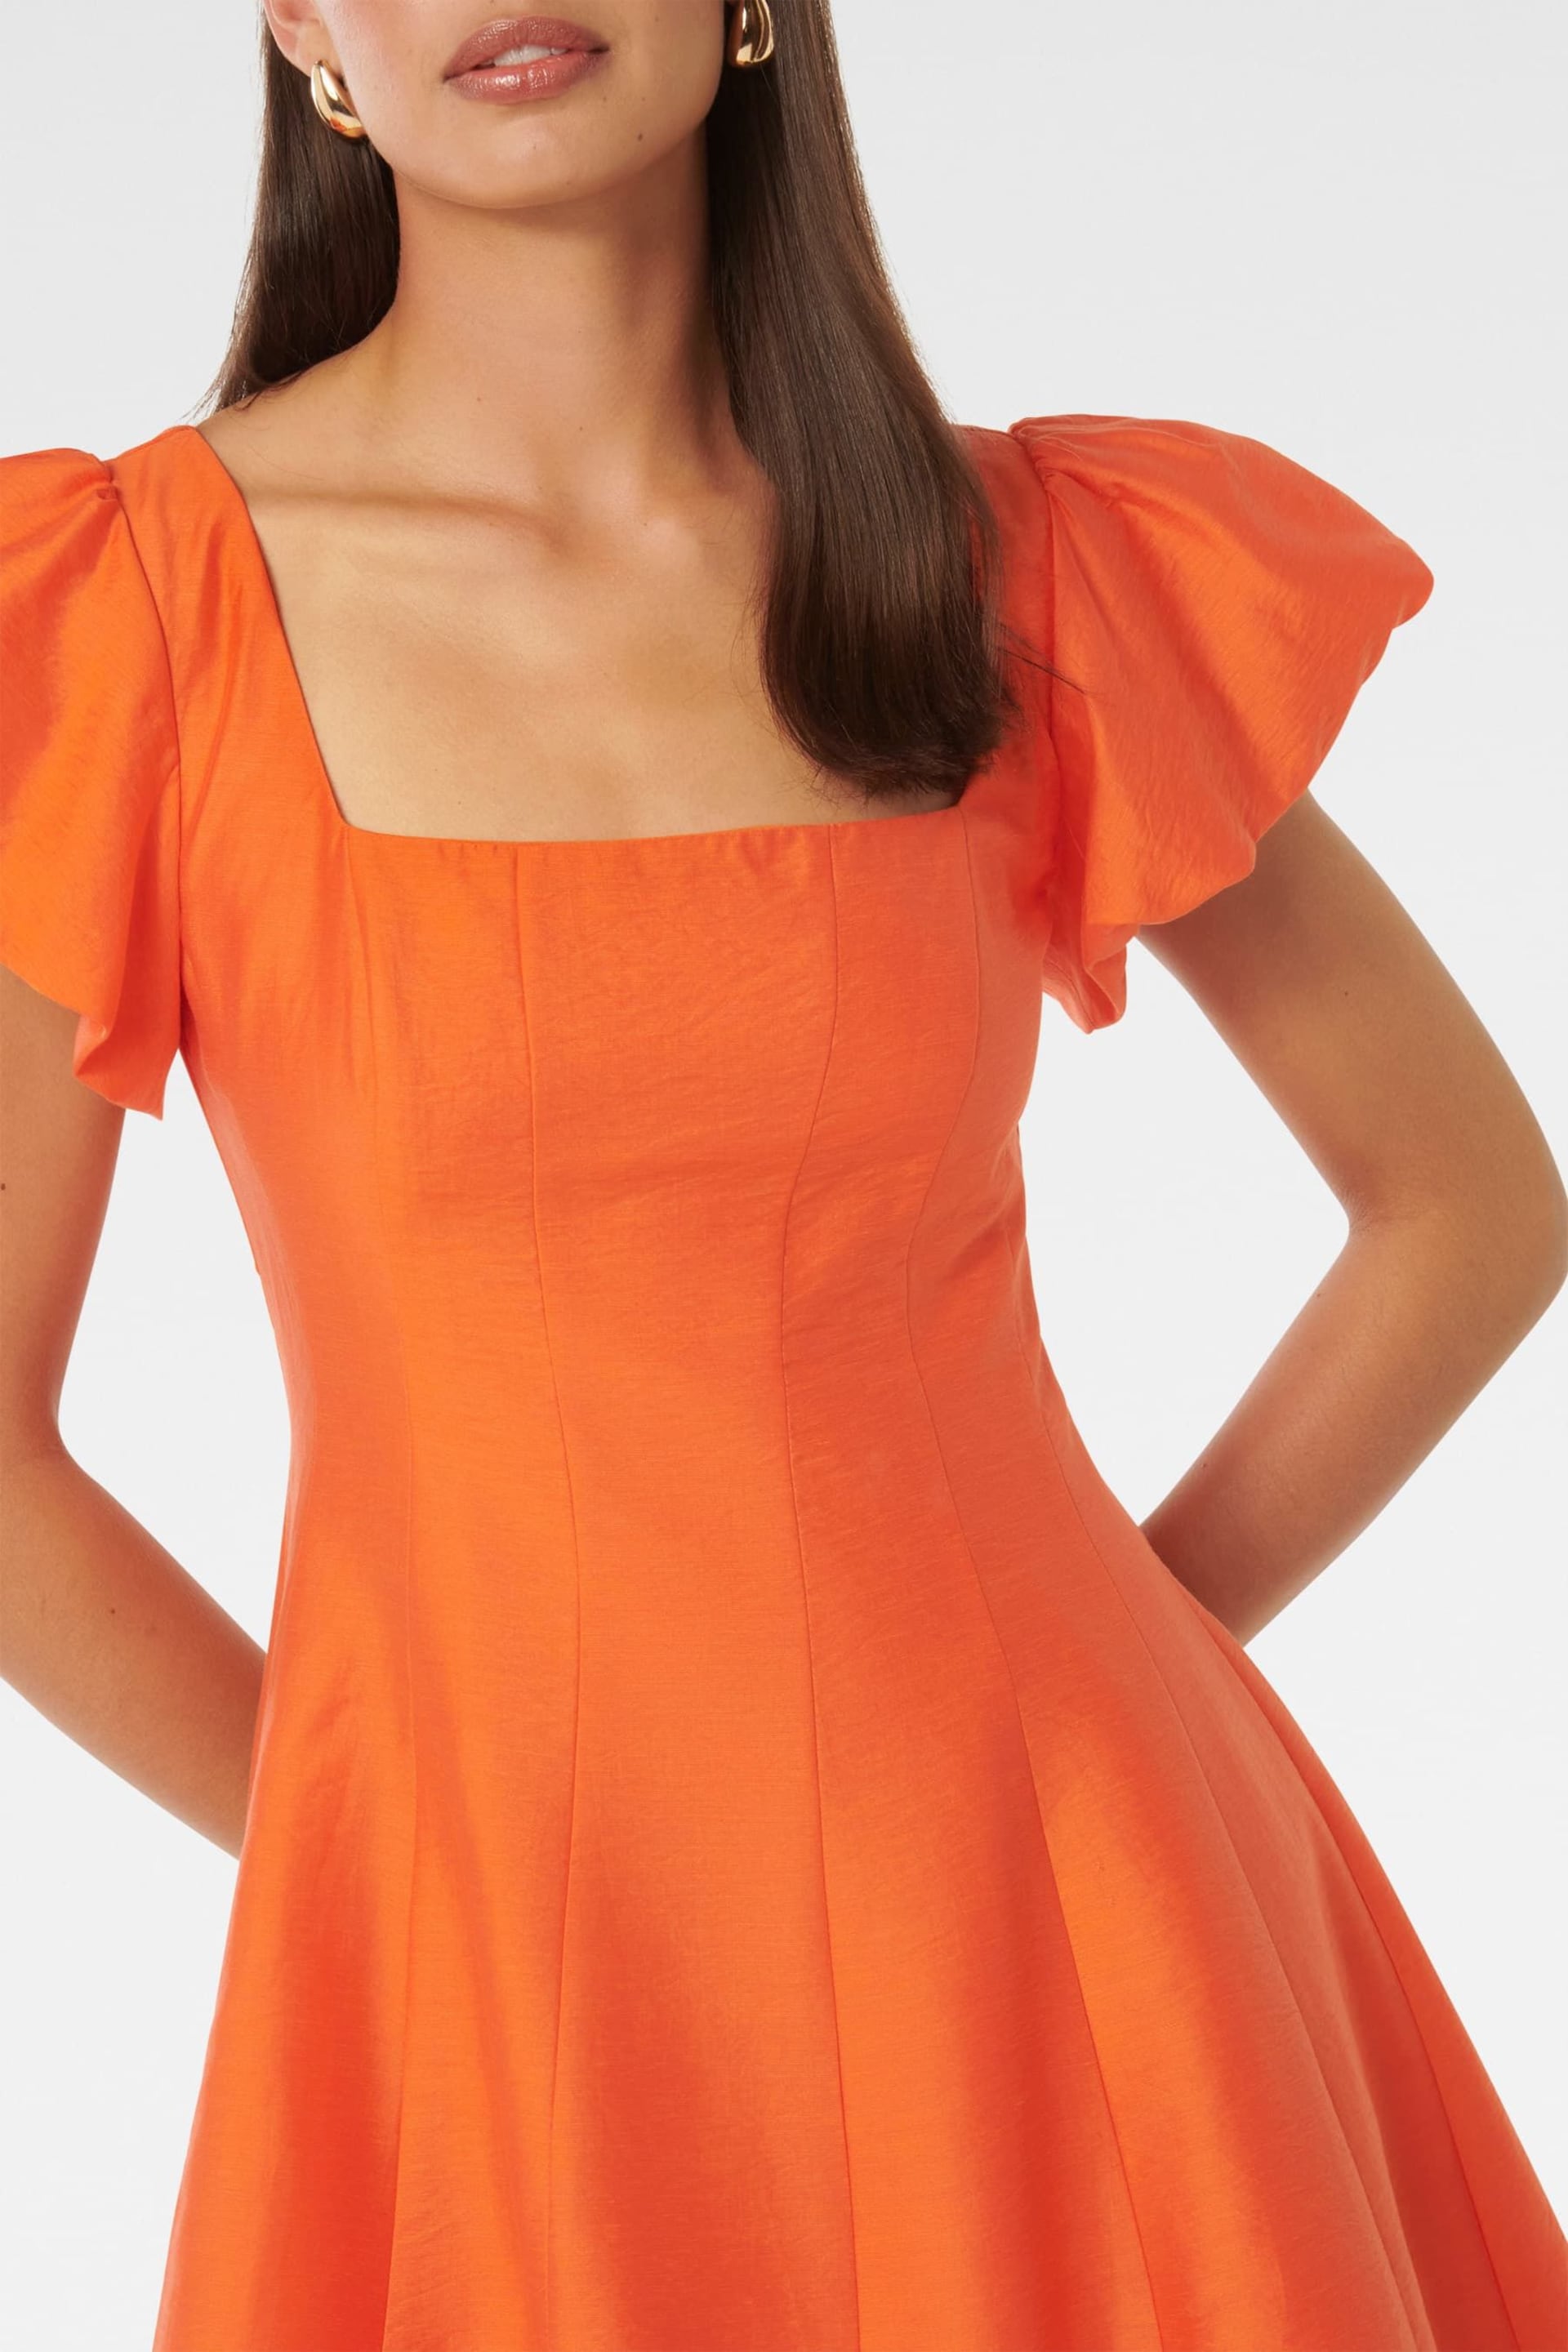 Forever New Orange Josie Square Neck Mini Dress contains Linen - Image 2 of 5